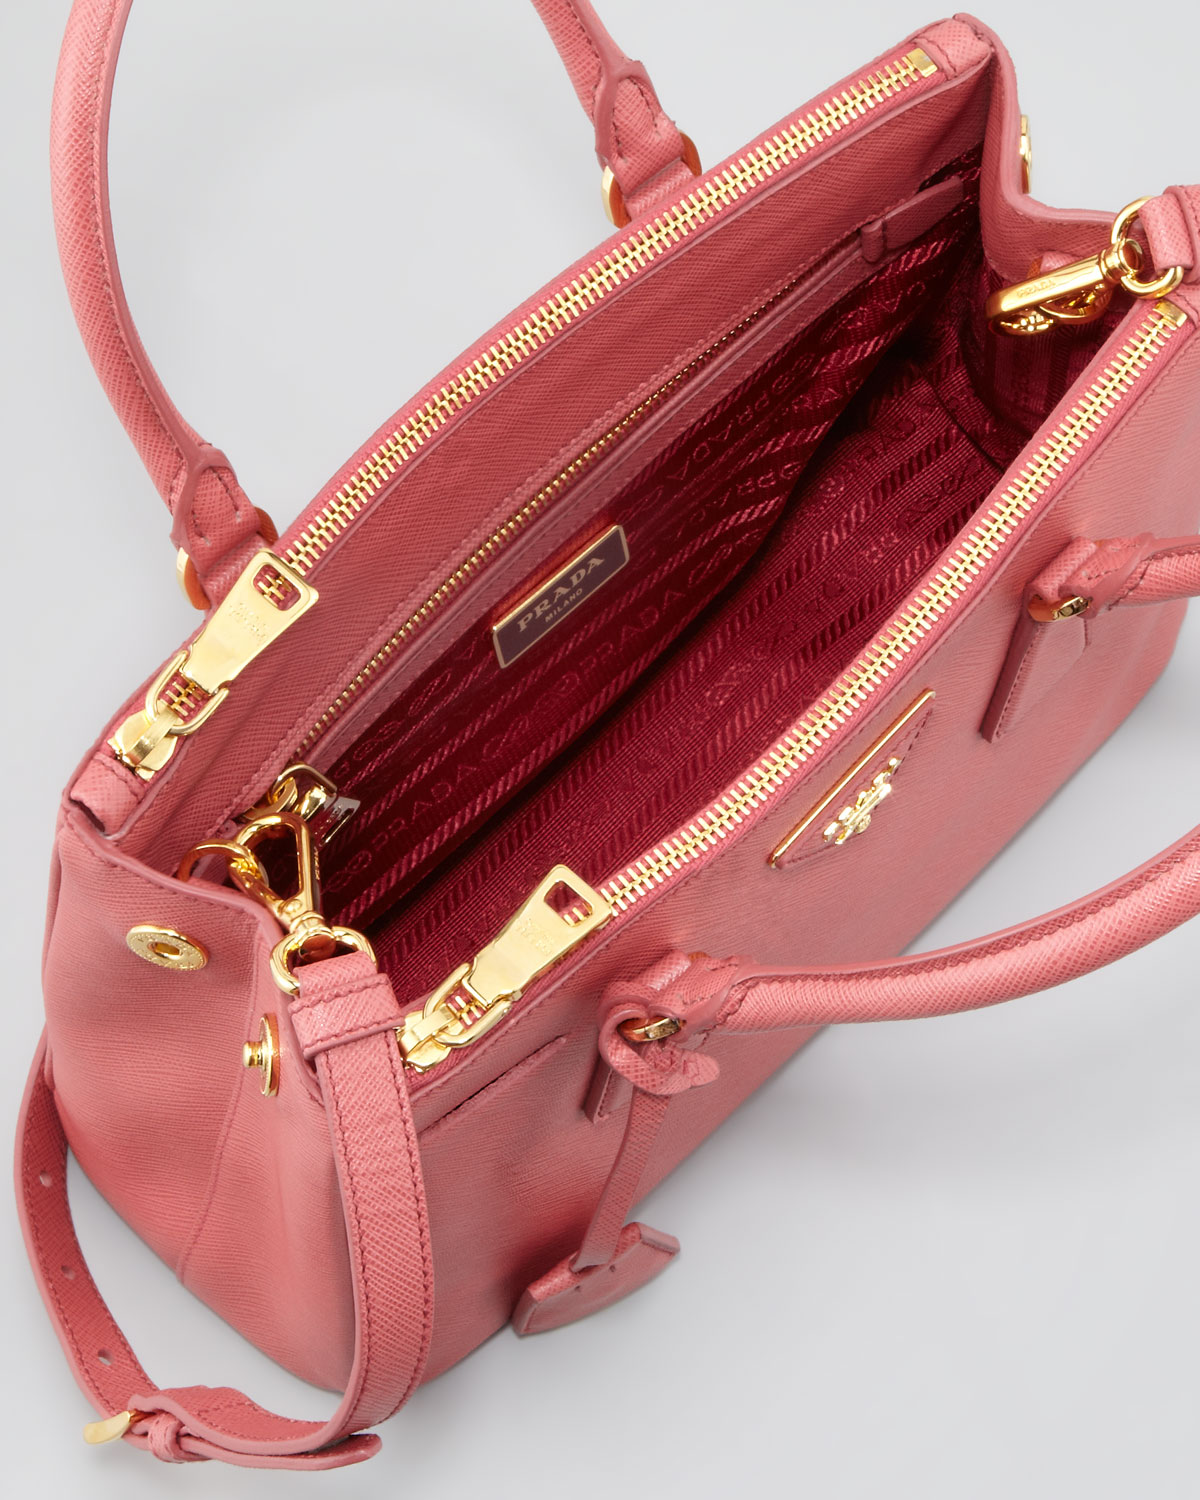 Lyst - Prada Mini Saffiano Lux Tote Bag in Pink